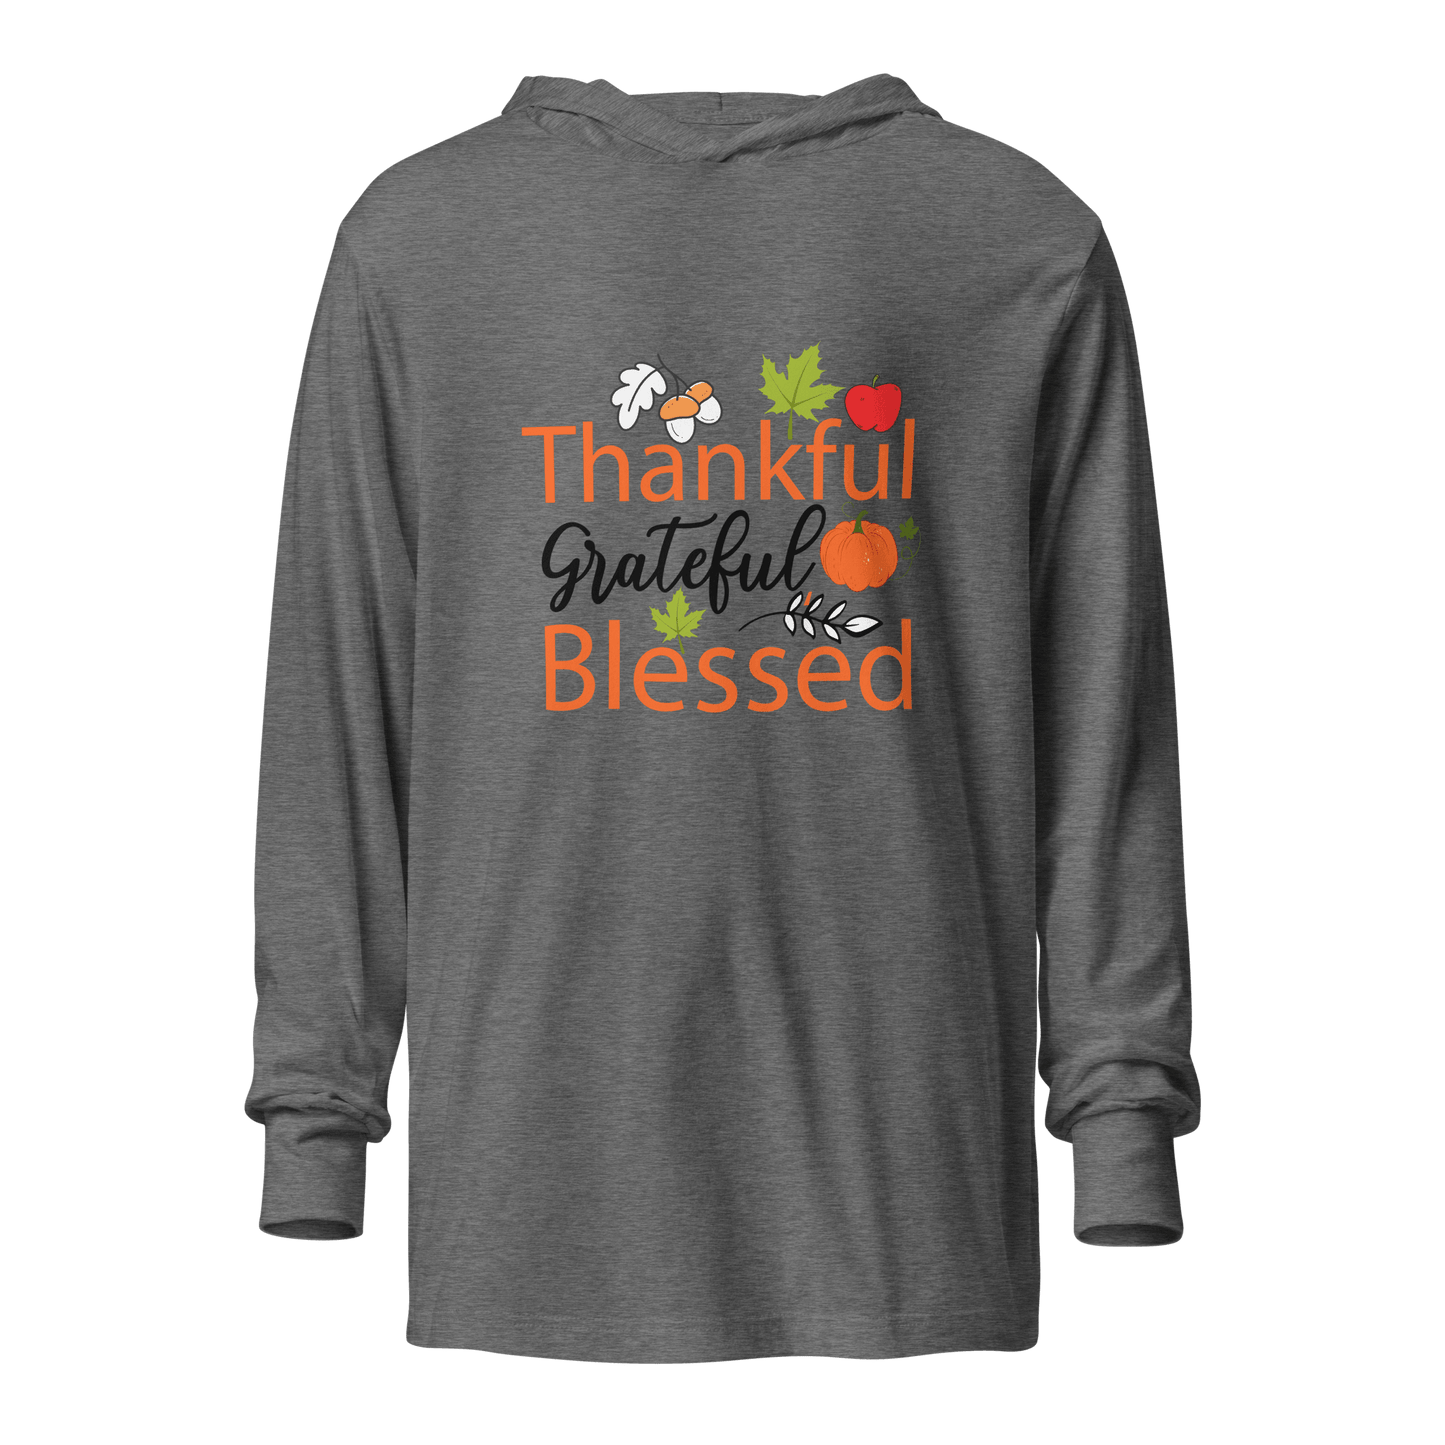 Thankful Grateful Blessed Hooded long-sleeve tee